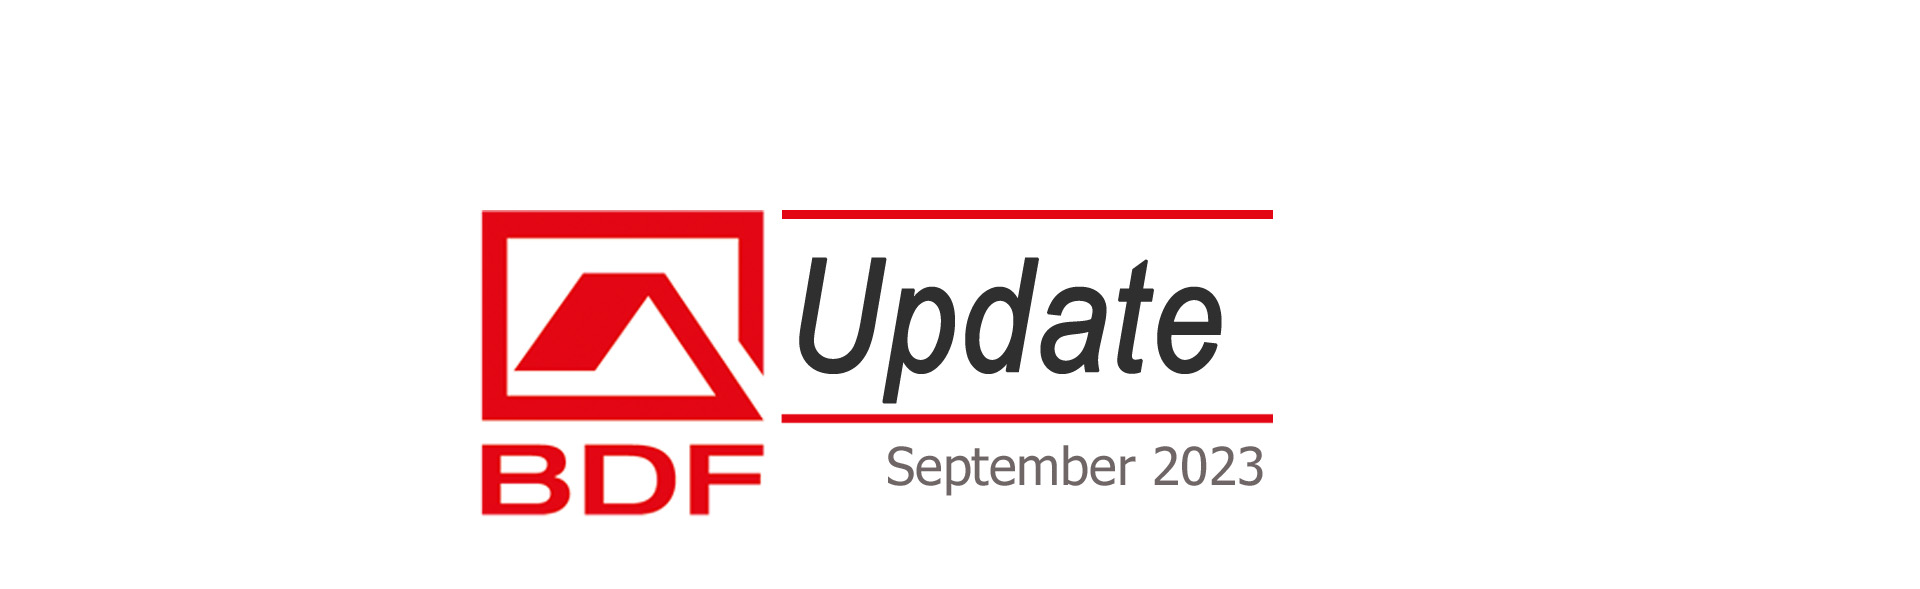 BDF Update September 2023